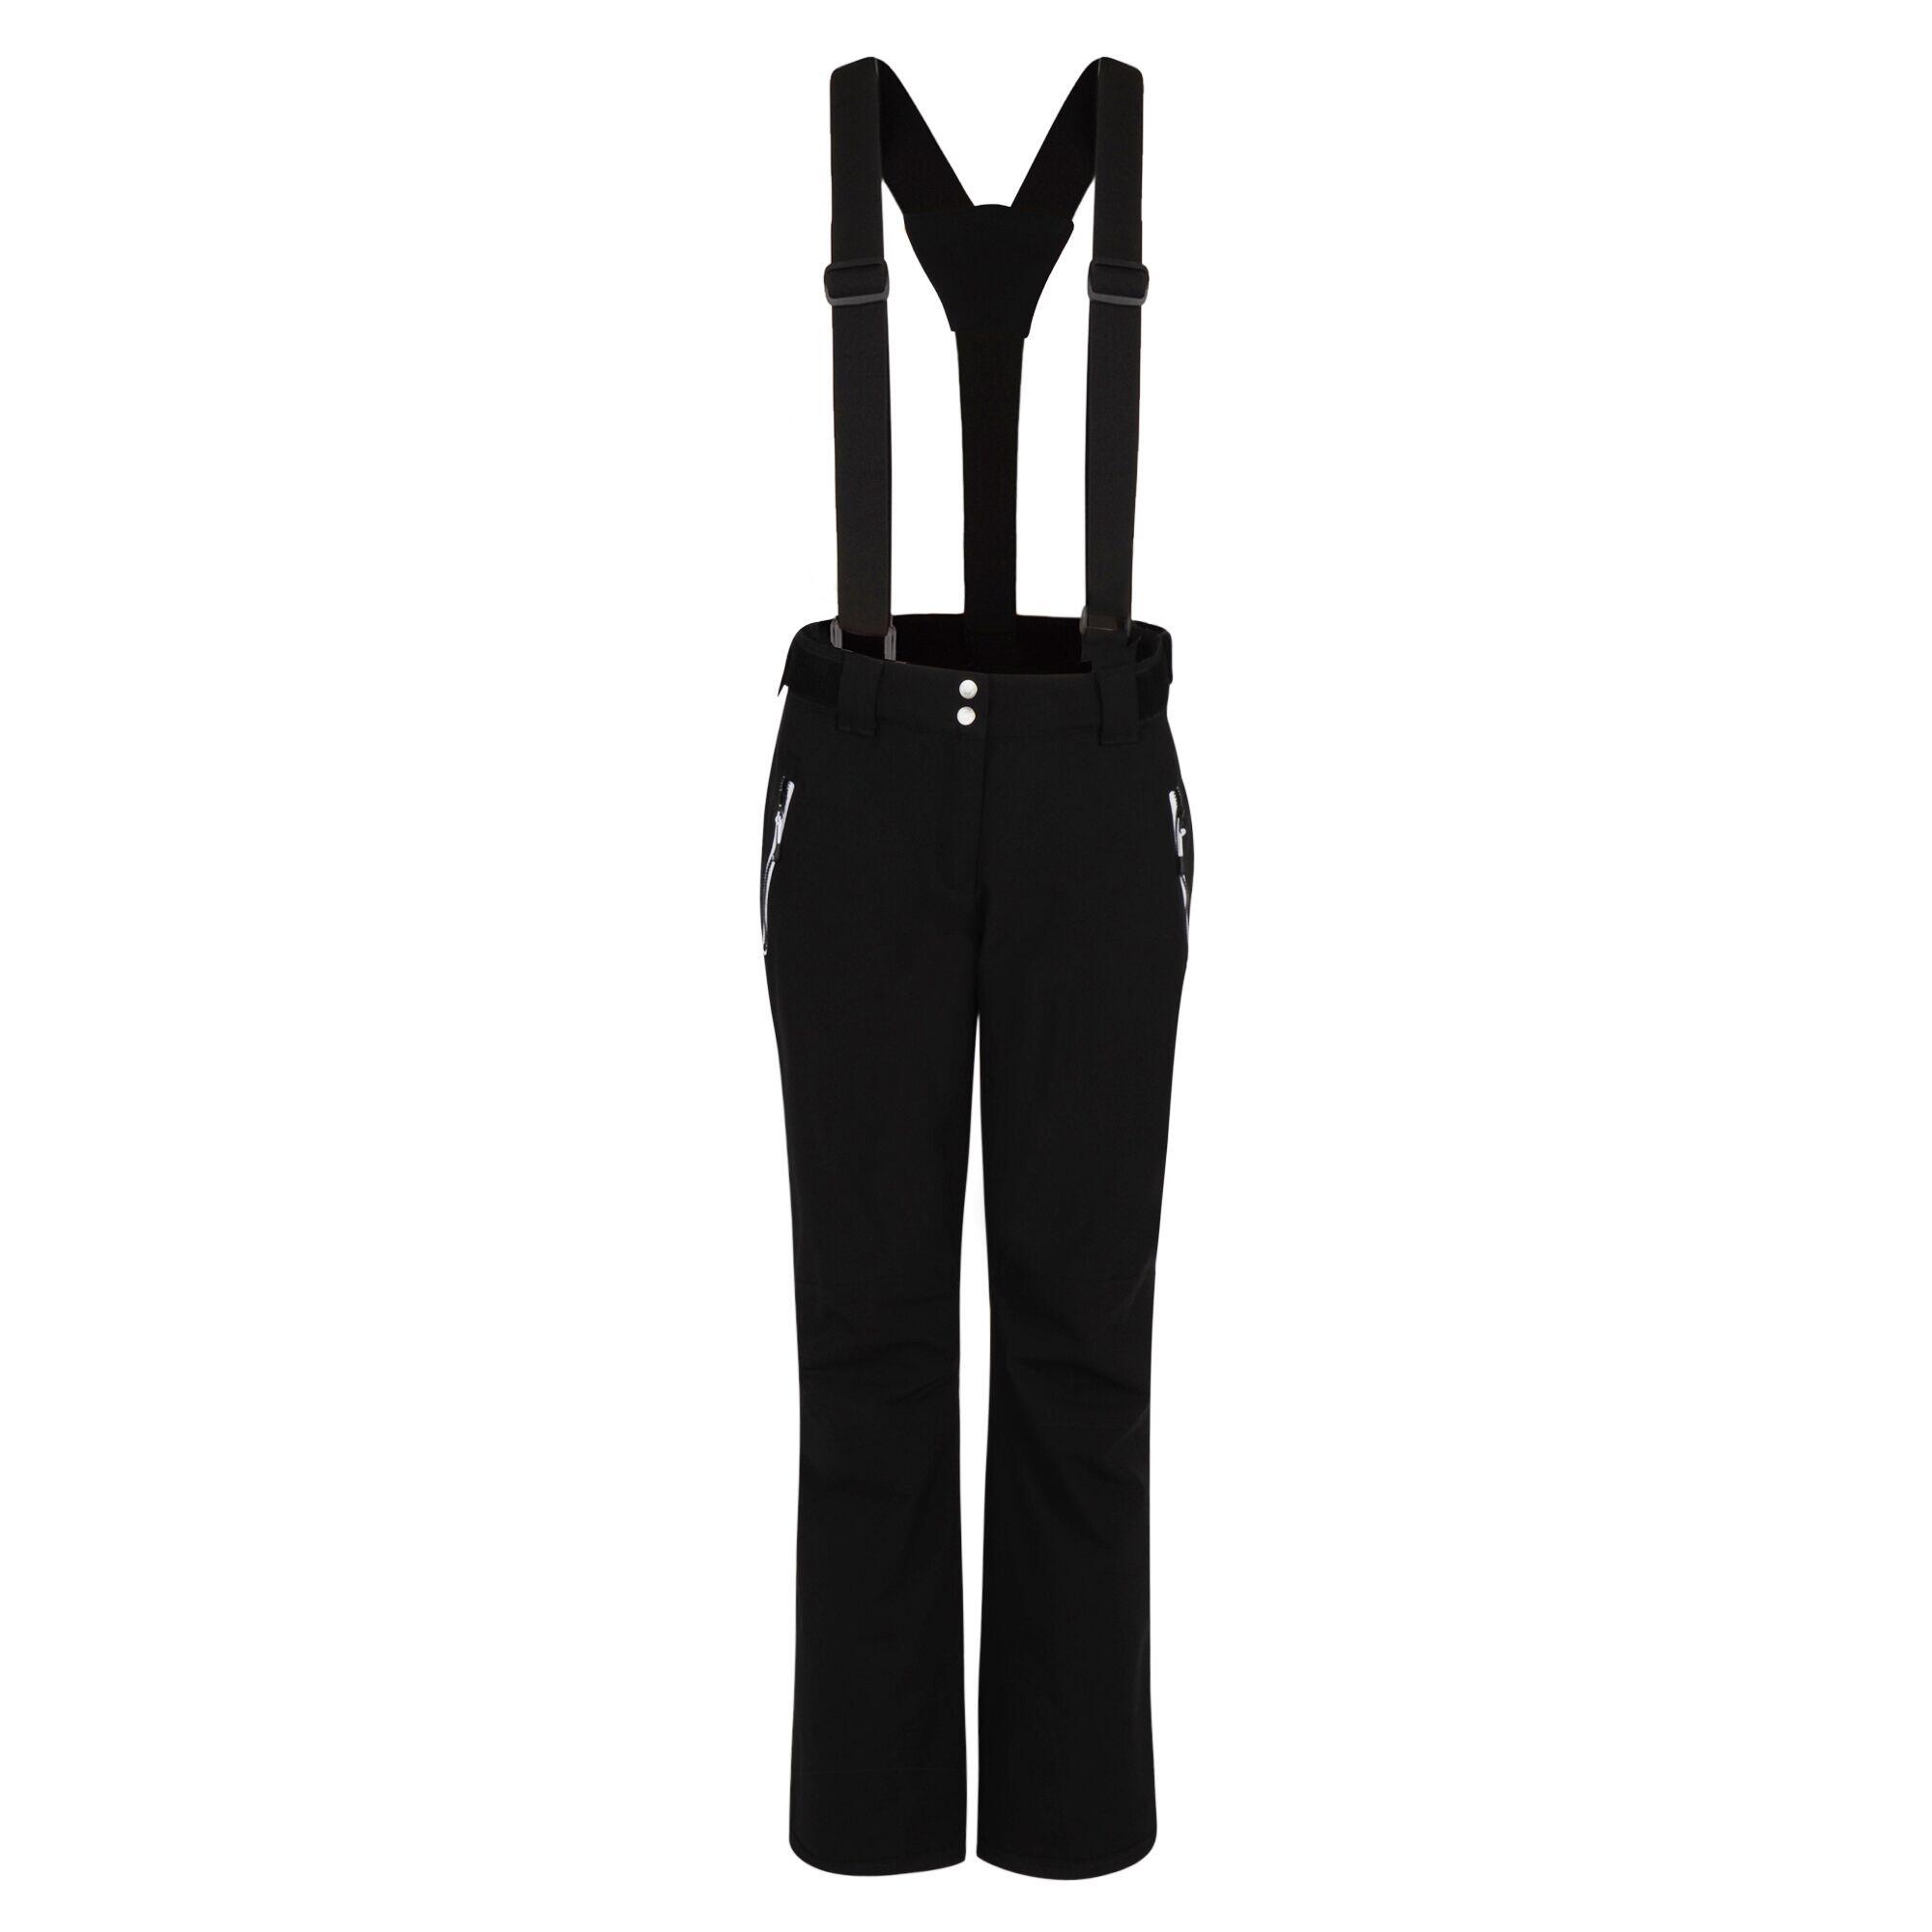 Effused II Women's Ski Pants - Black 1/5